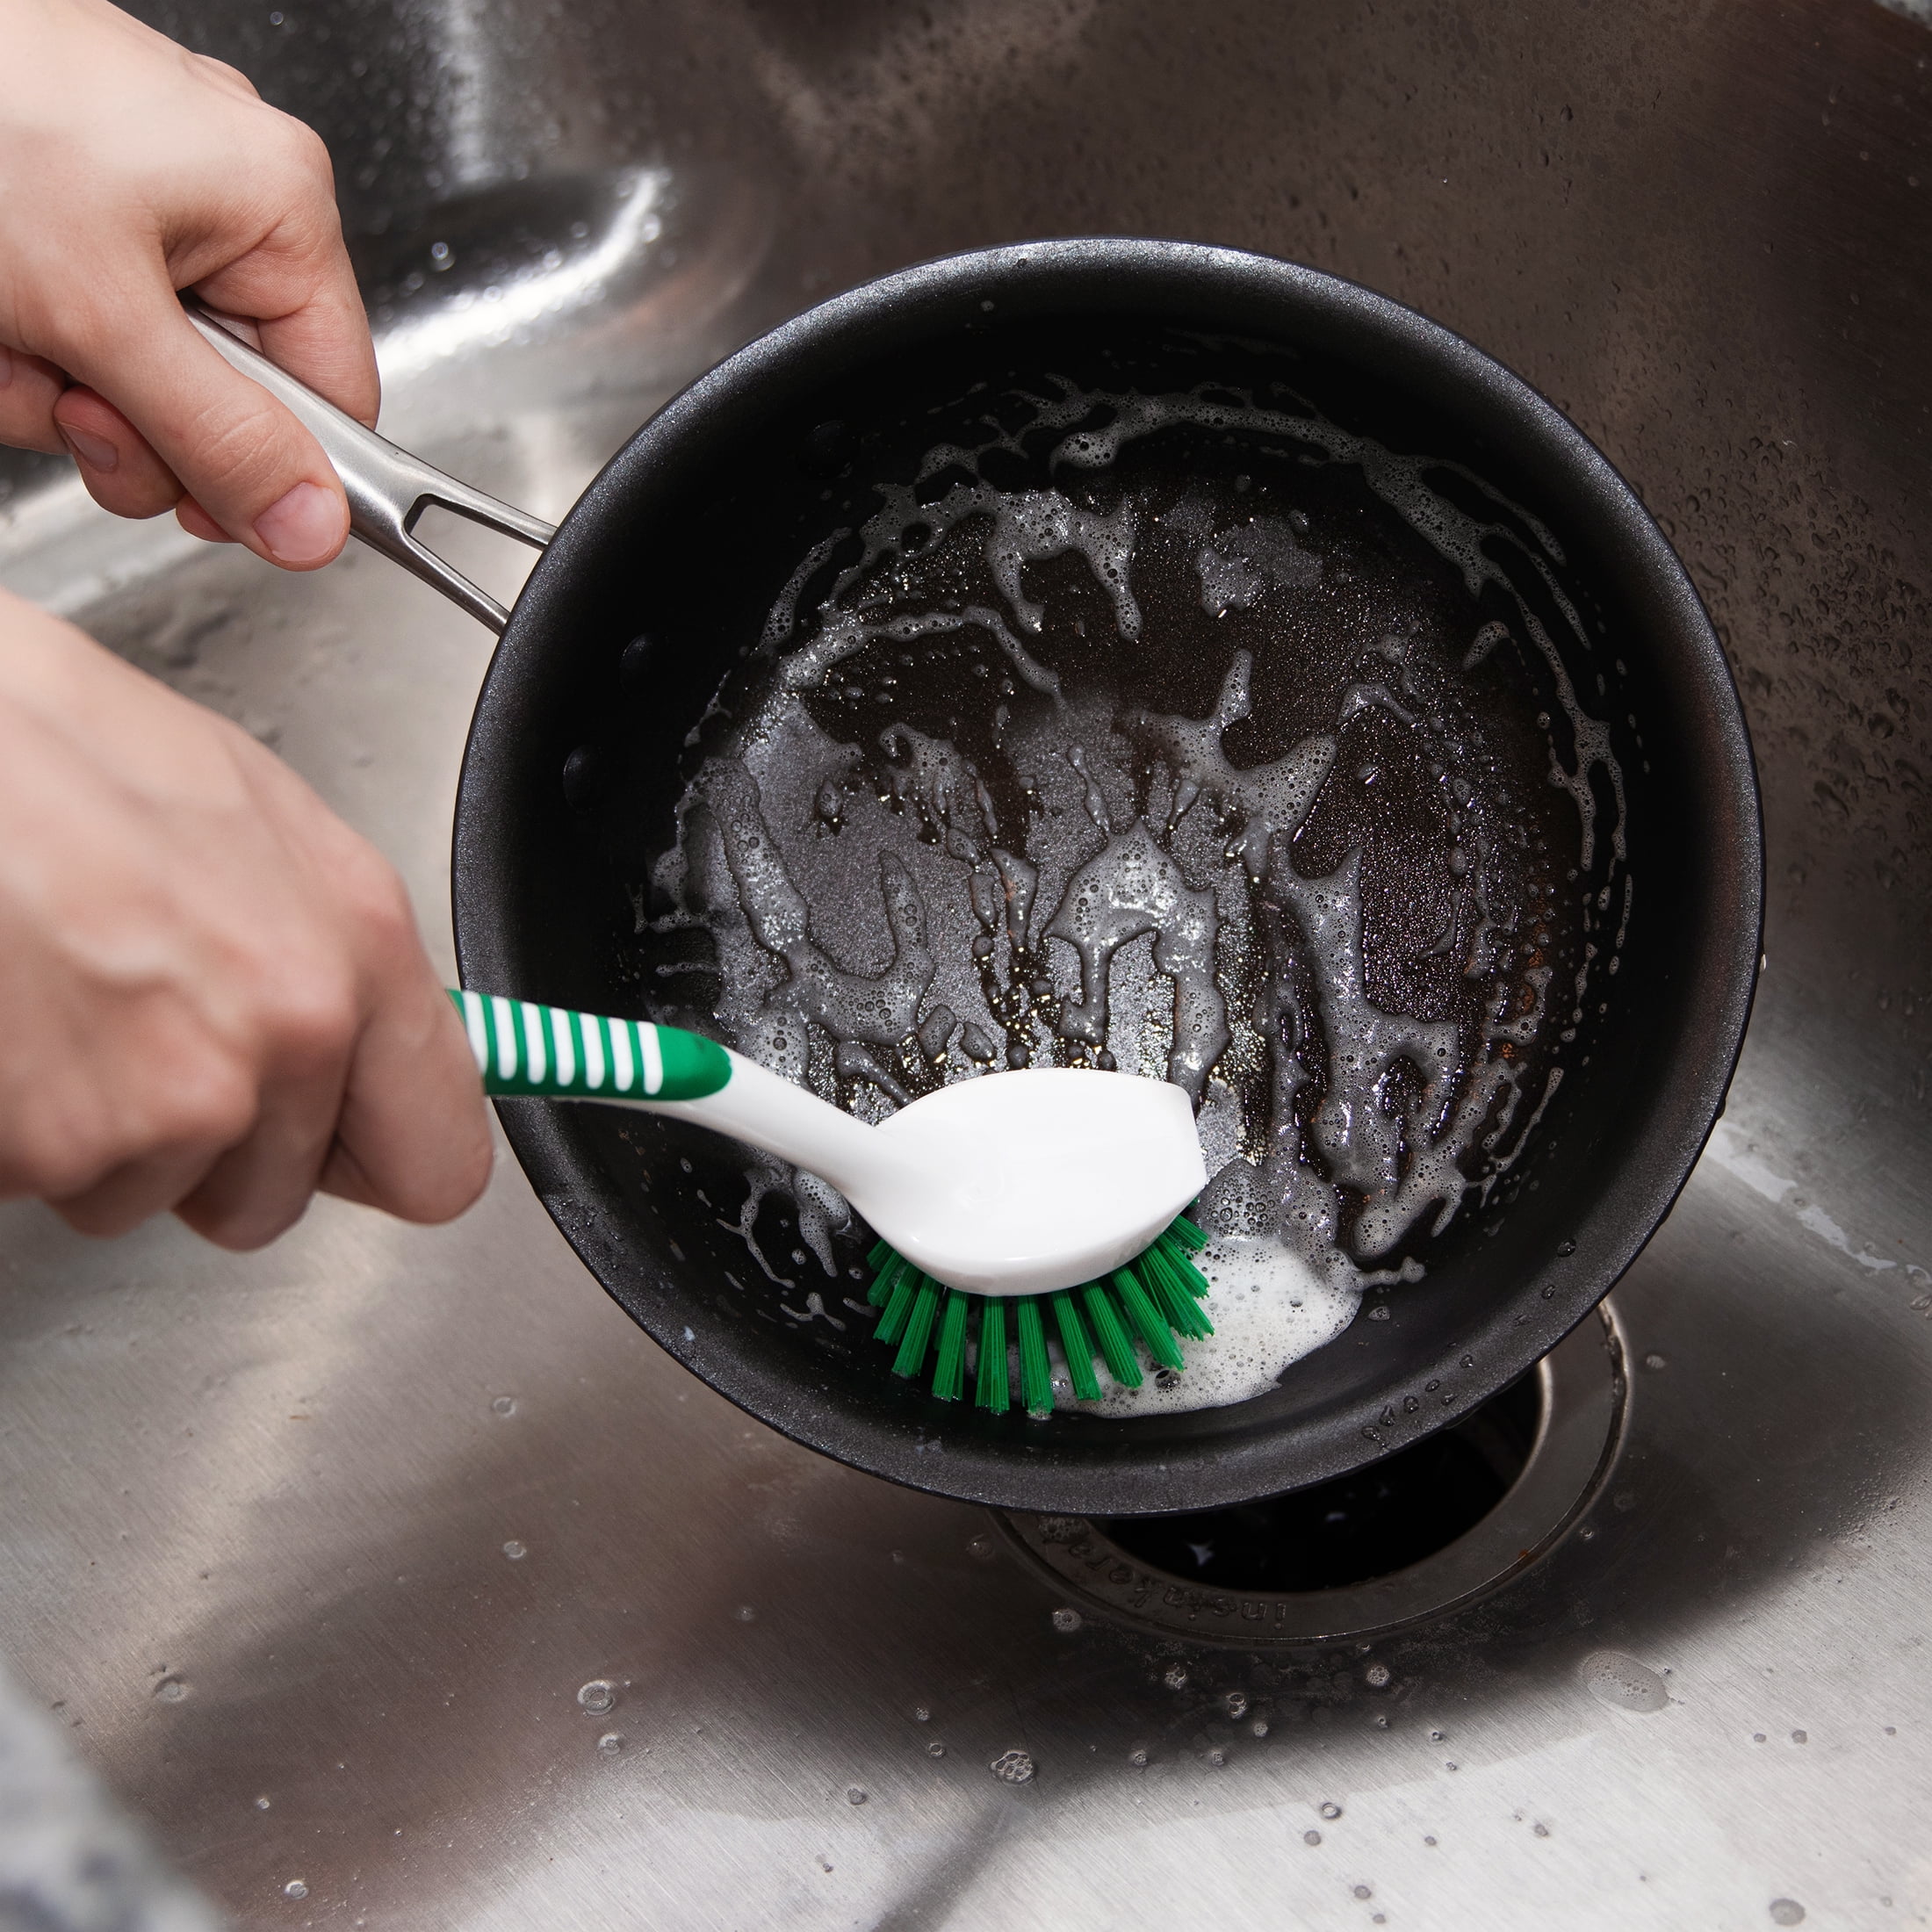 Libman All-Purpose Scrubbing Dish Wand - Fillable, with 4 Multi-Purpose  Sponge Head Refills Green Large Handle